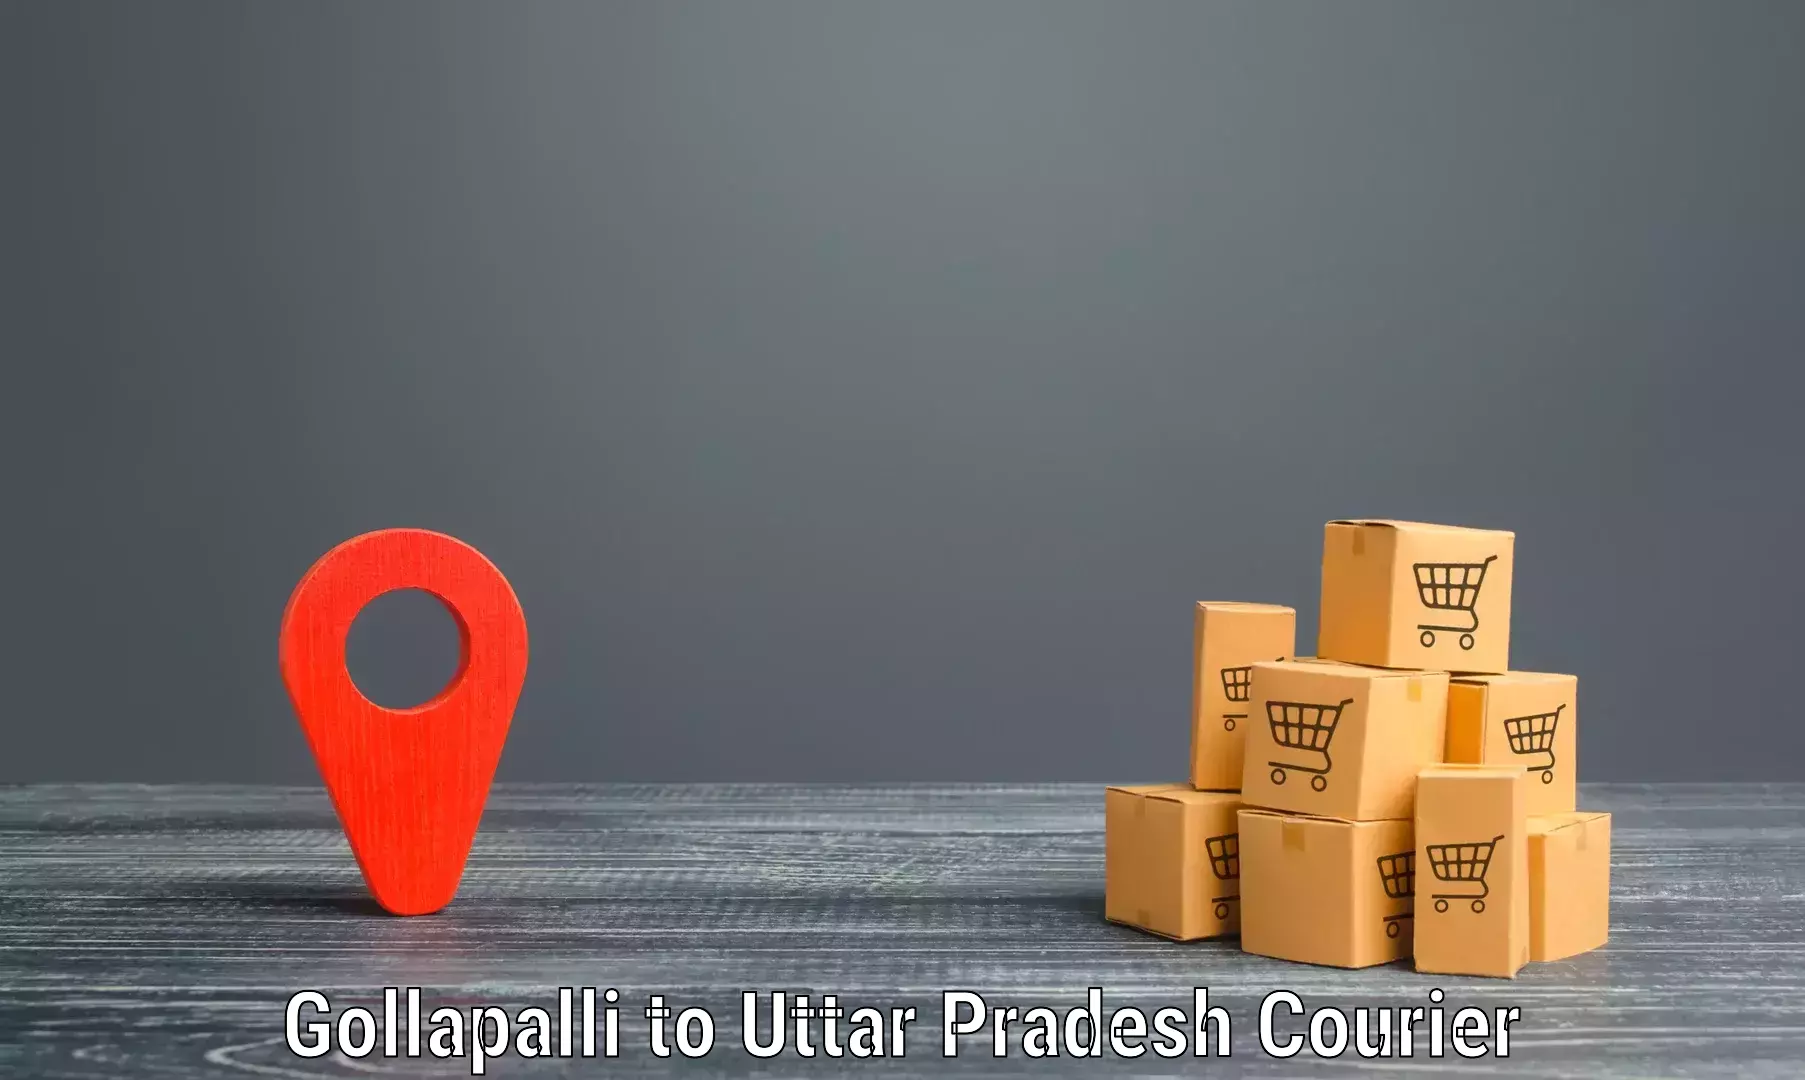 Same-day delivery options Gollapalli to Gorakhpur